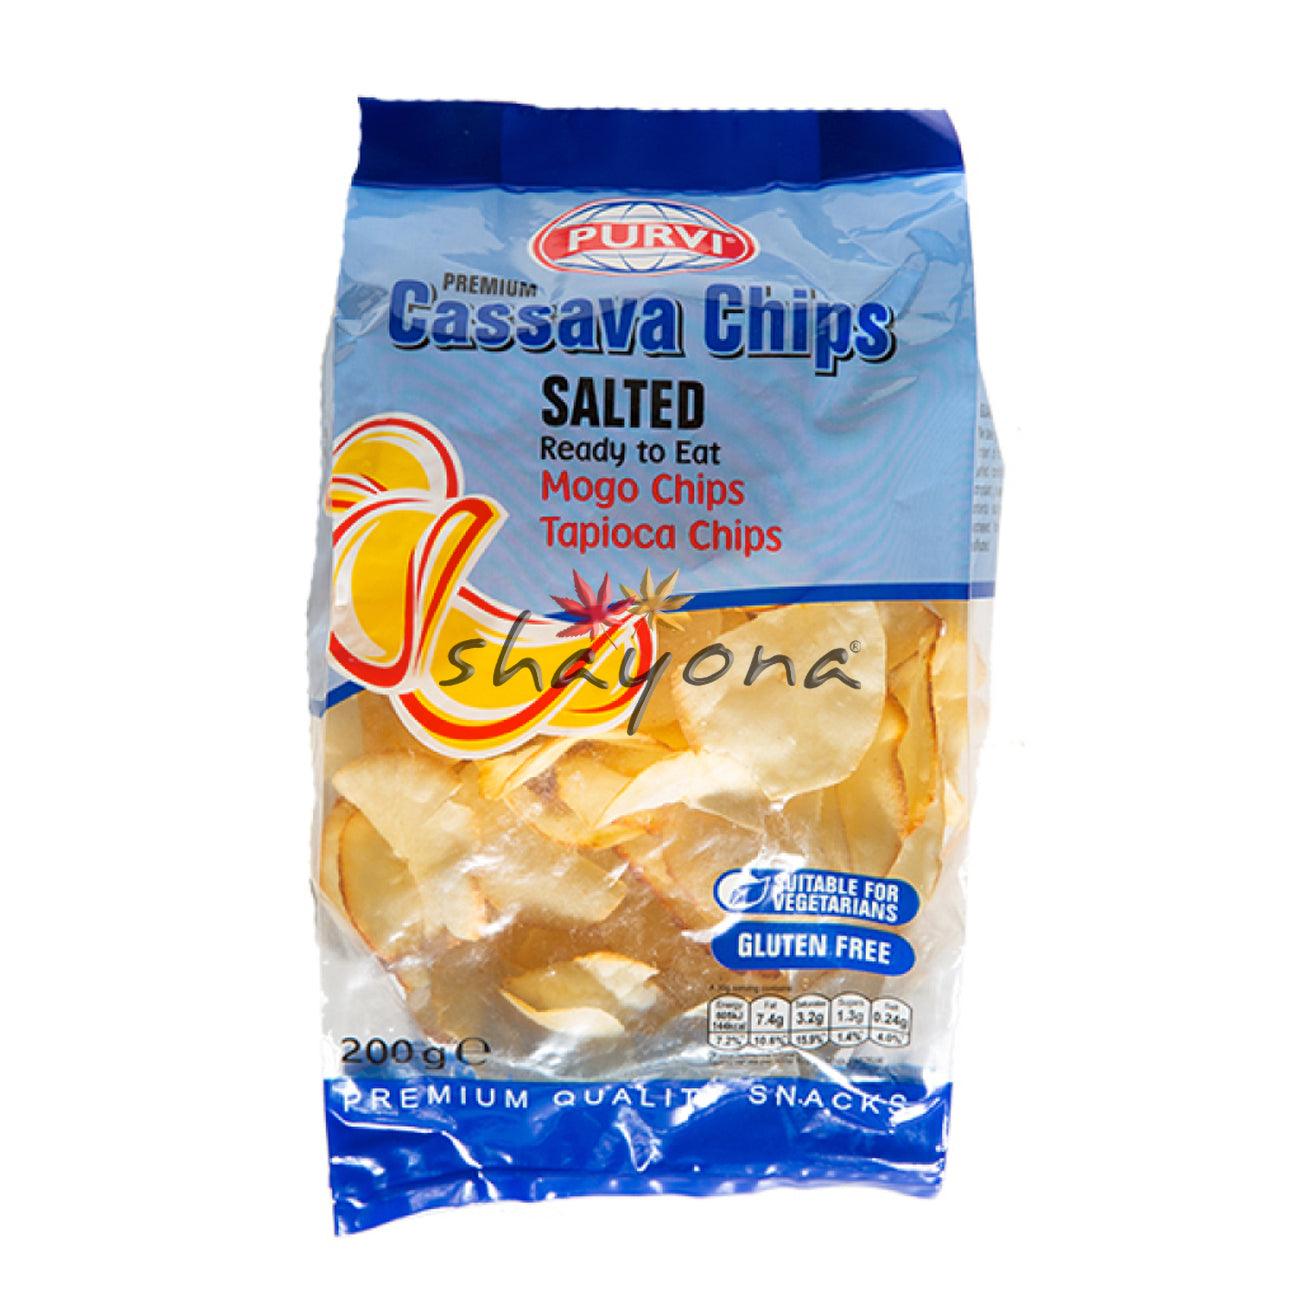 Purvi Cassava Chips Salted - Shayona UK